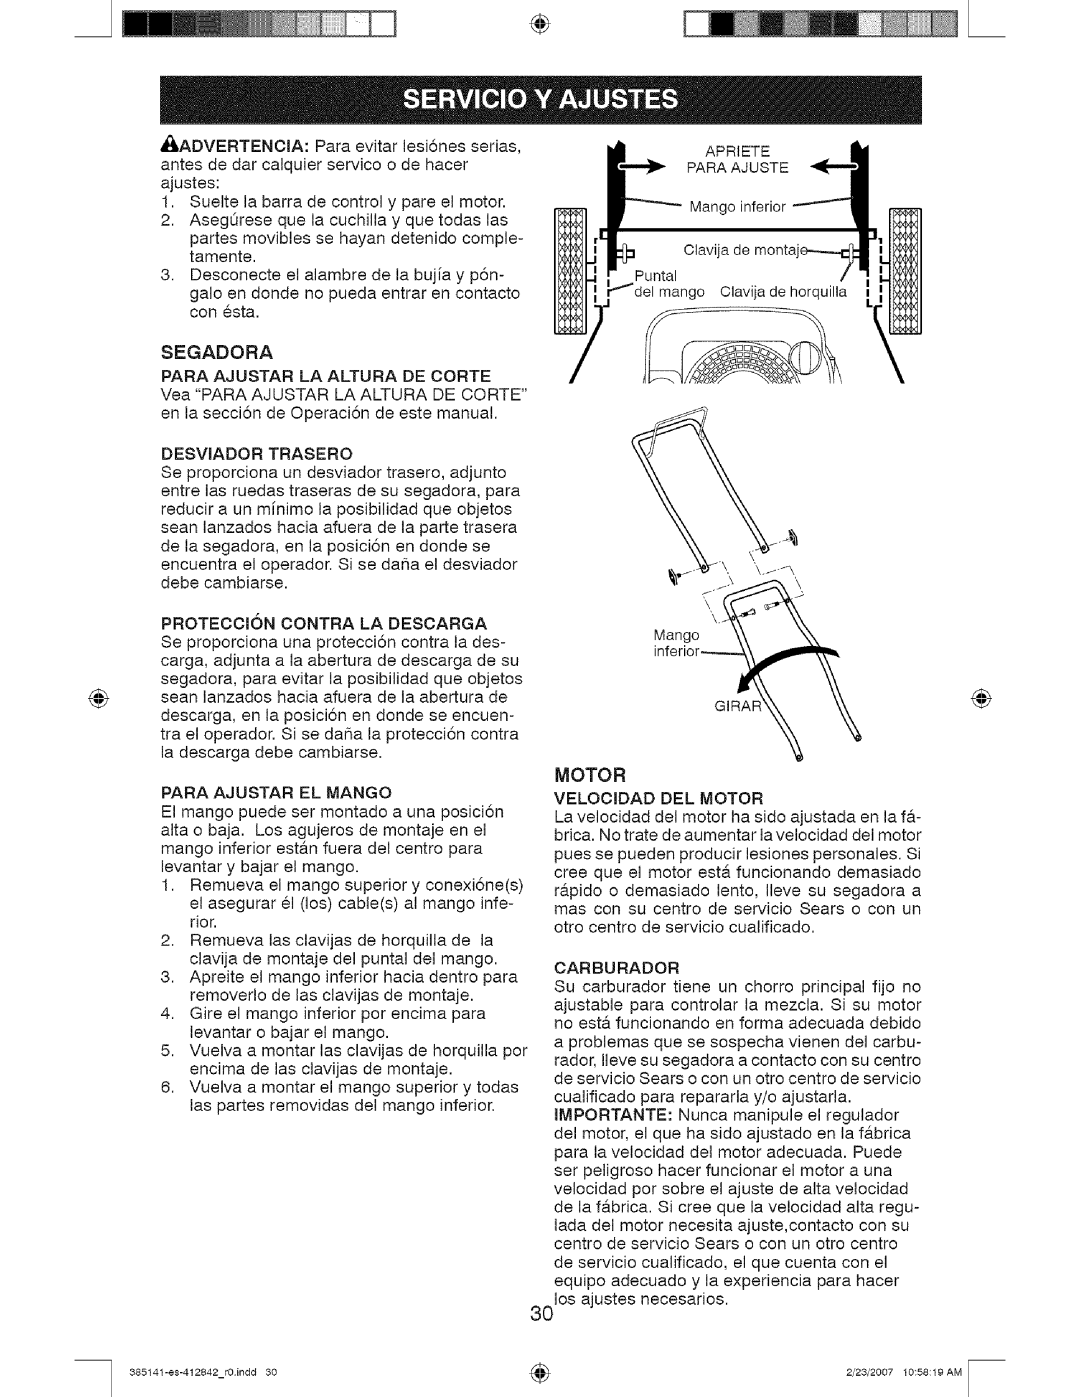 Craftsman 917, 385141 manual ADVERTENClA Para evitar lesi6nes serias 